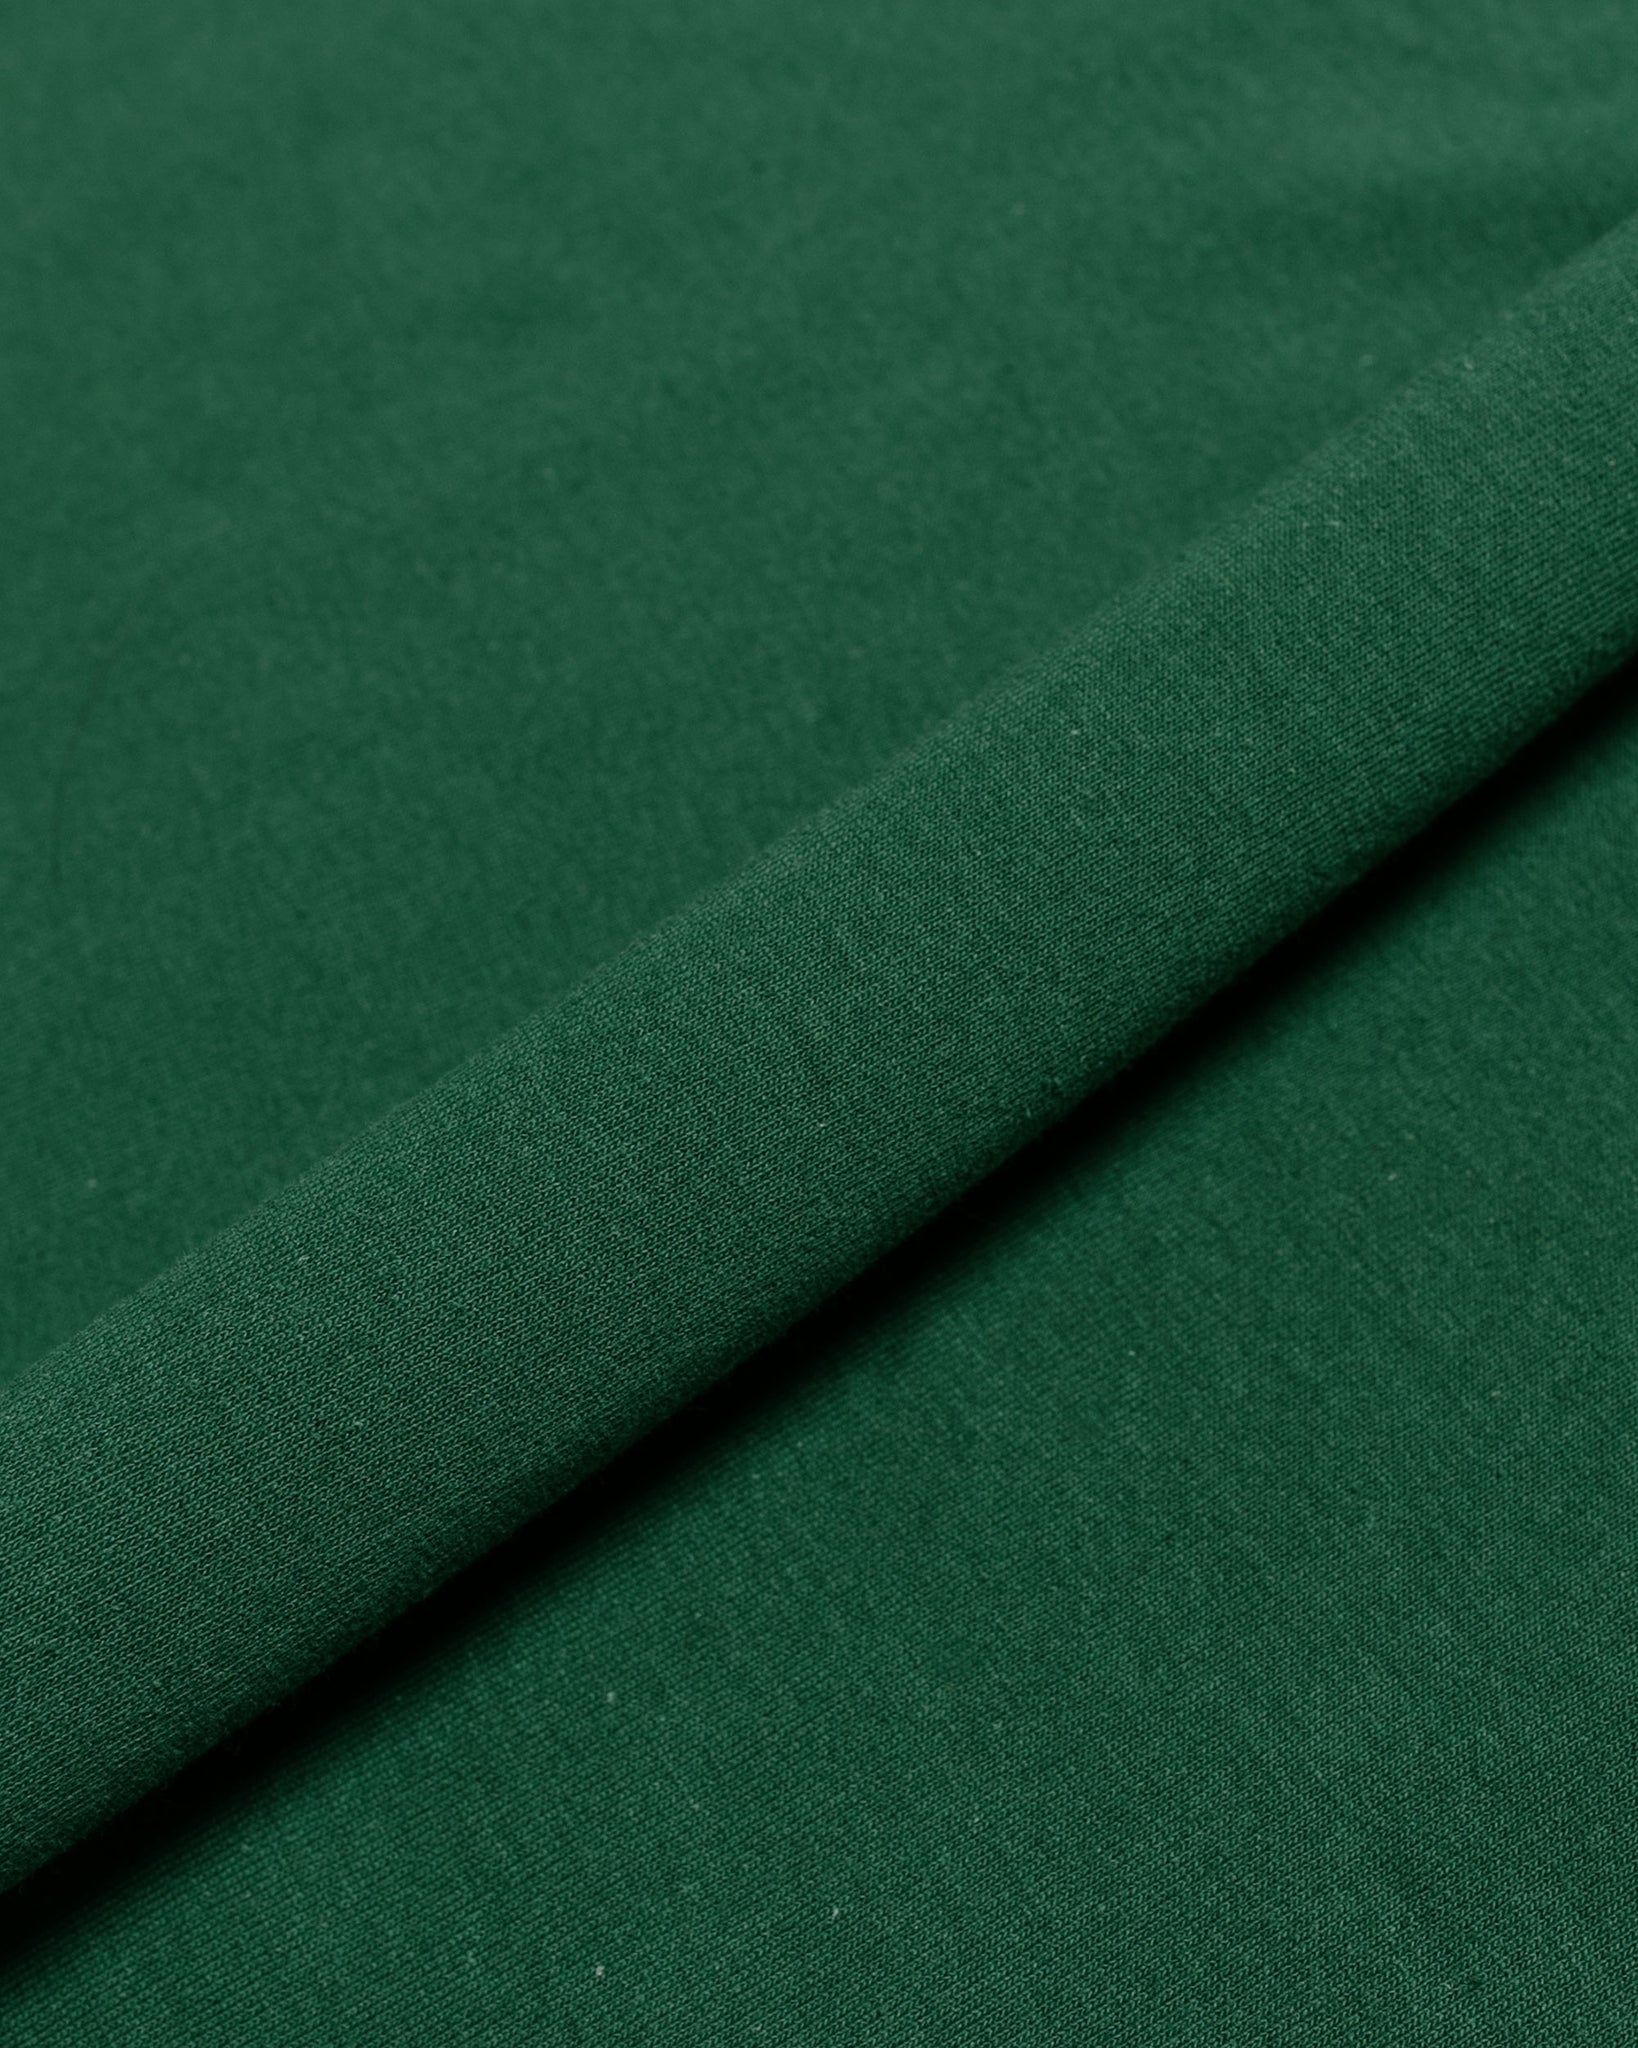 Randy's Garments Pocket Tee Dark Green fabric